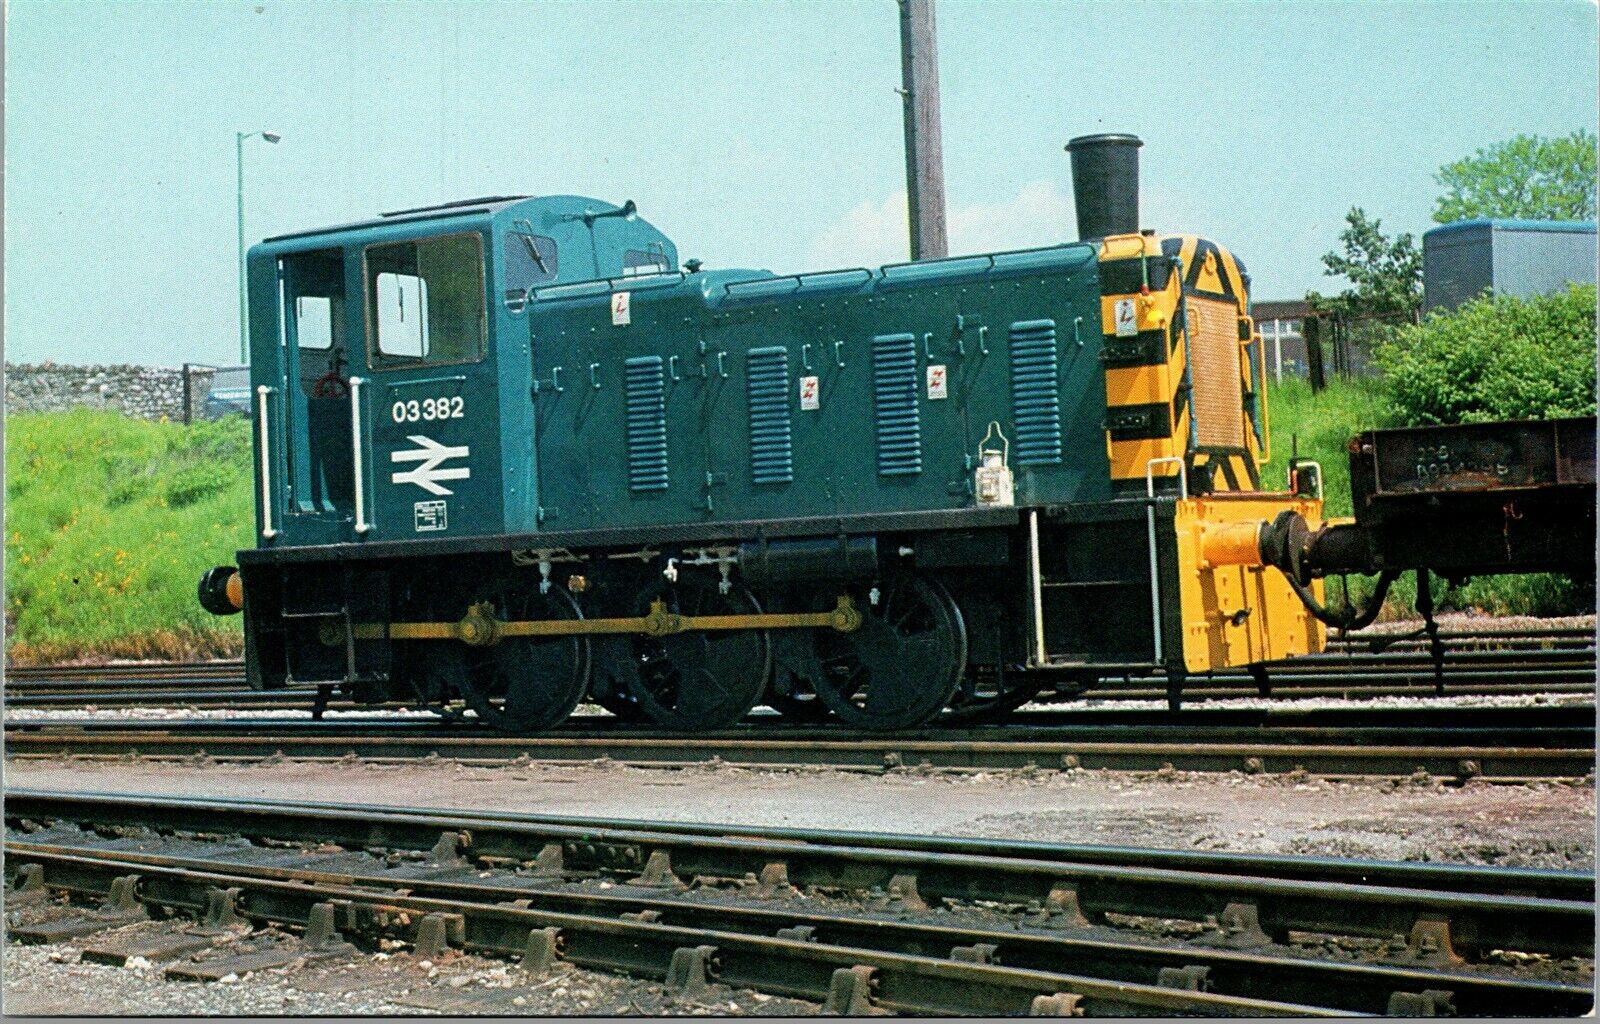 Vtg Shunter 03 382 Locomotive at Lawrence Hill Bristol UK Railroad Postcard